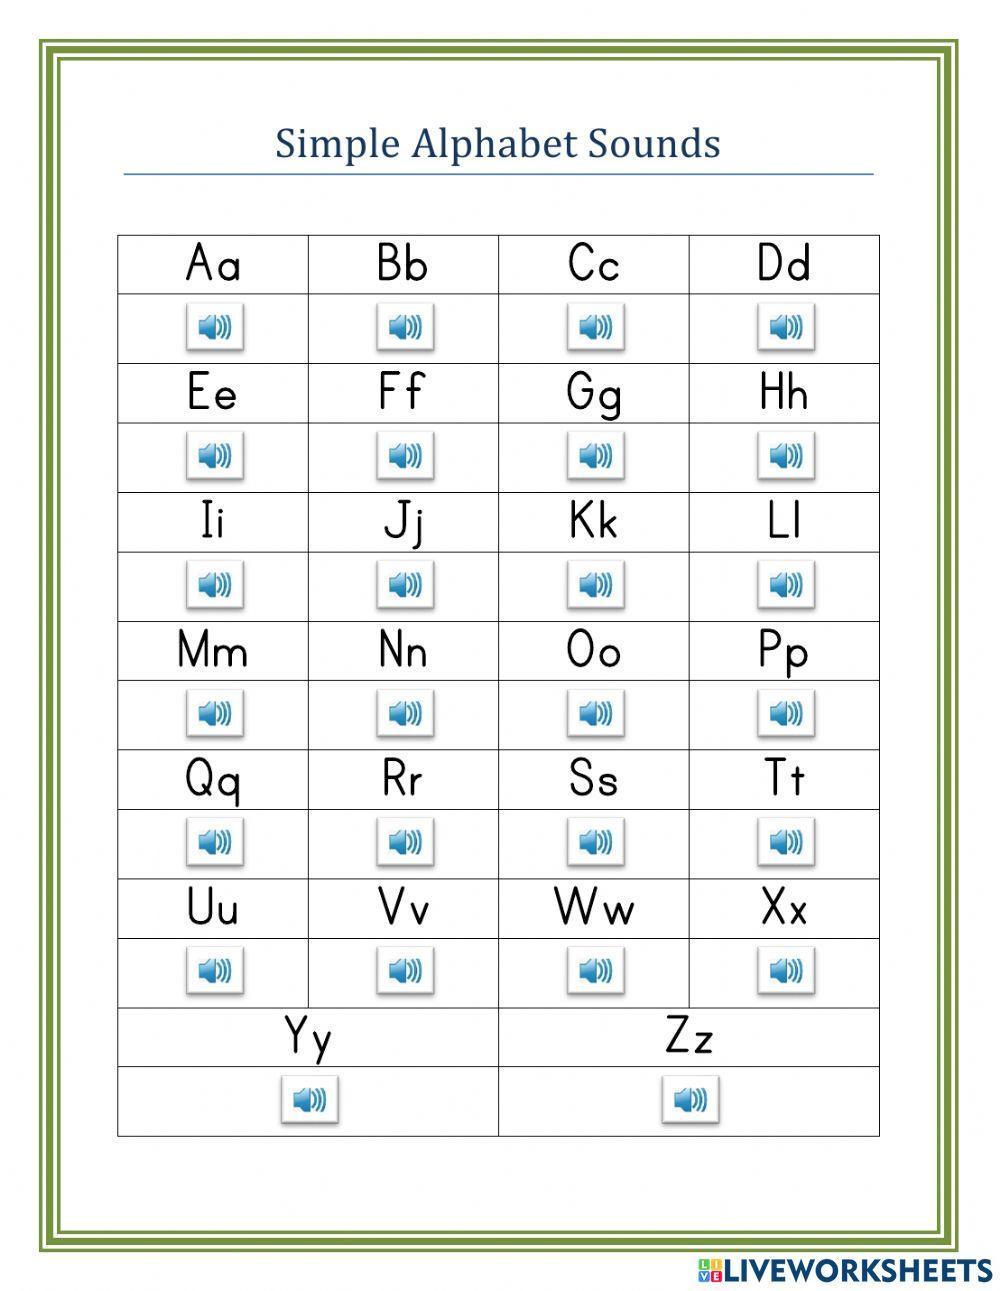 Simple Alphabet Sounds